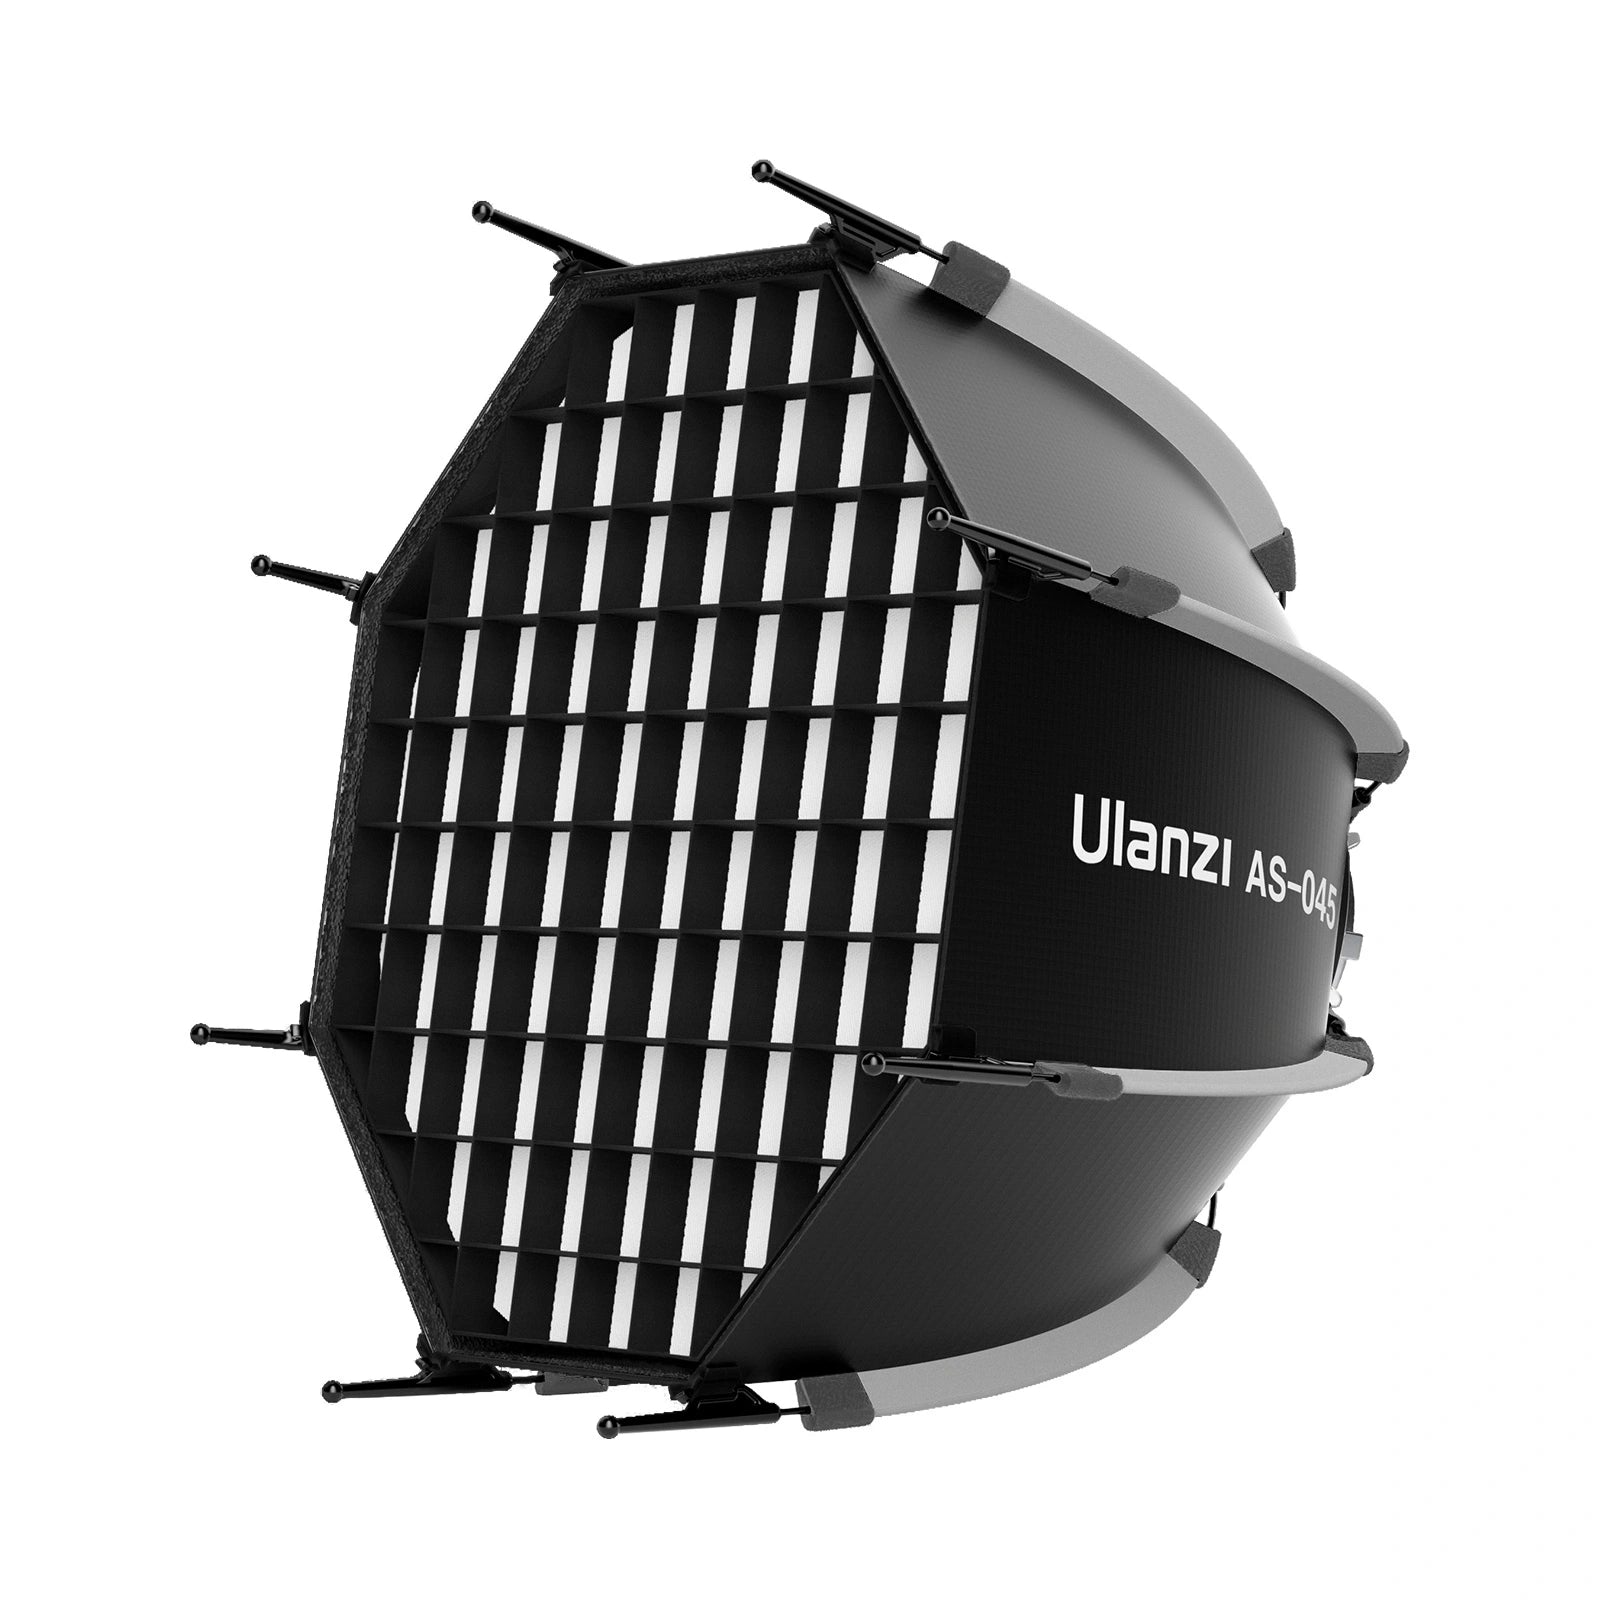 AS-045 Ulanzi Octagonal Release Quick Grid Honeycomb 3308 Softbox